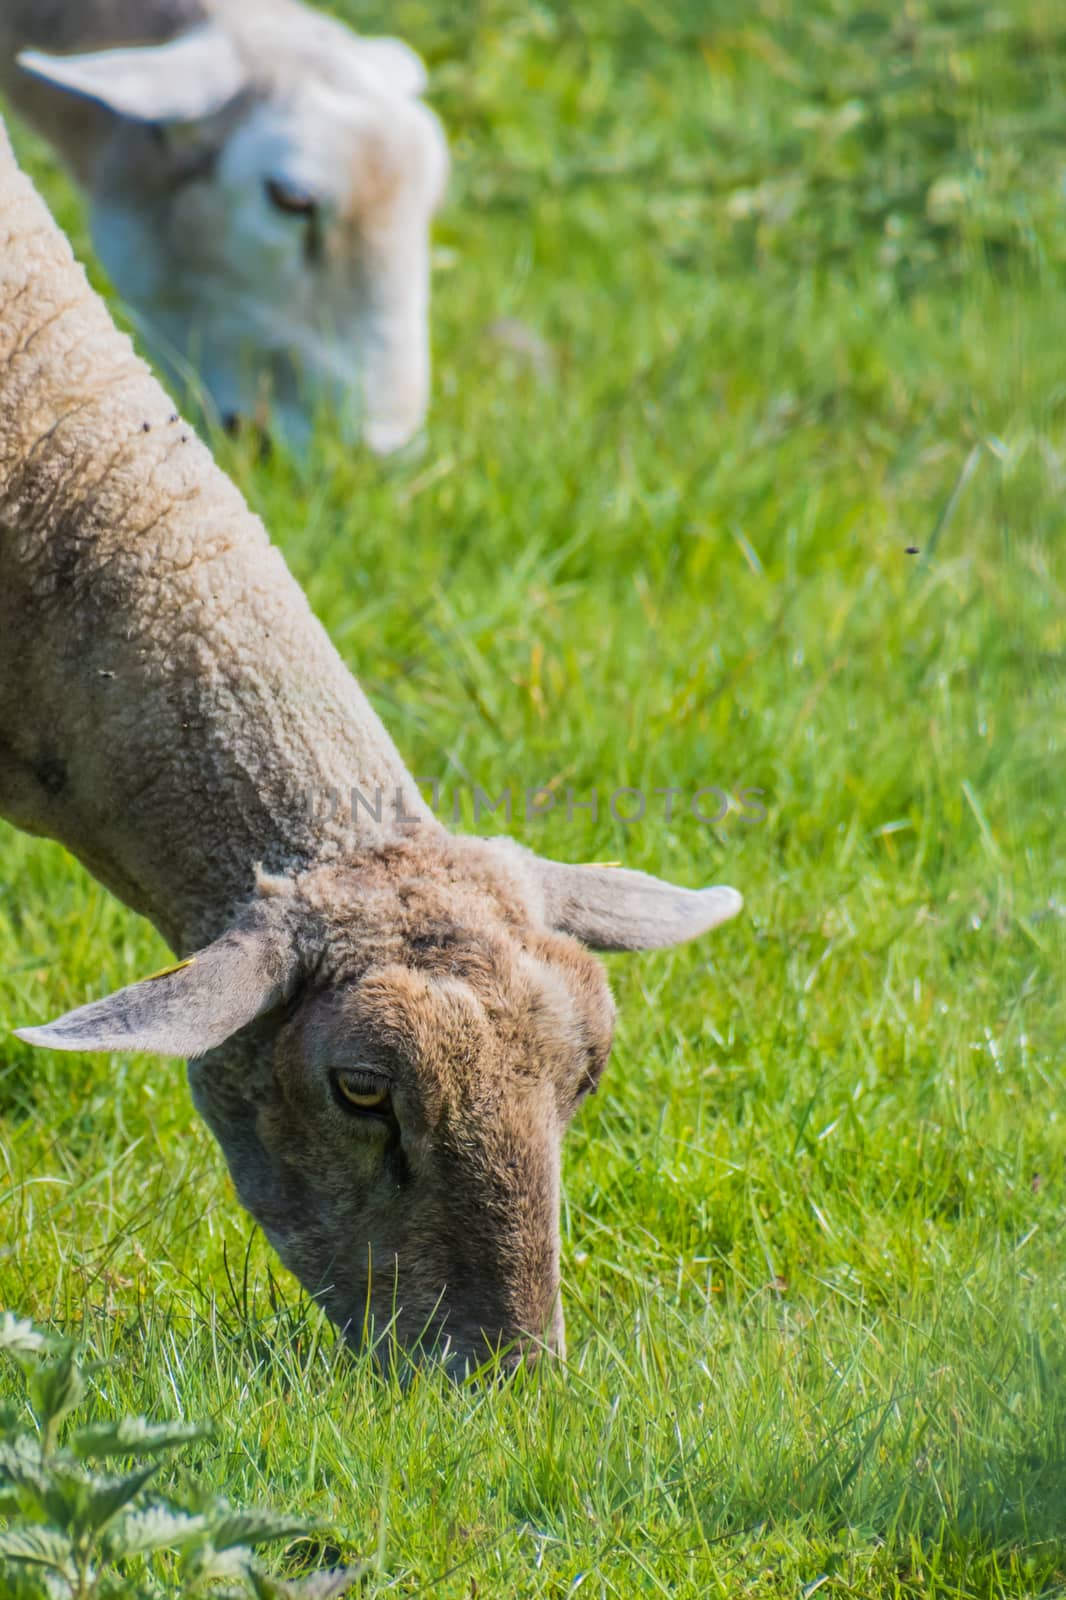 Goats on grassland white wool eating grass